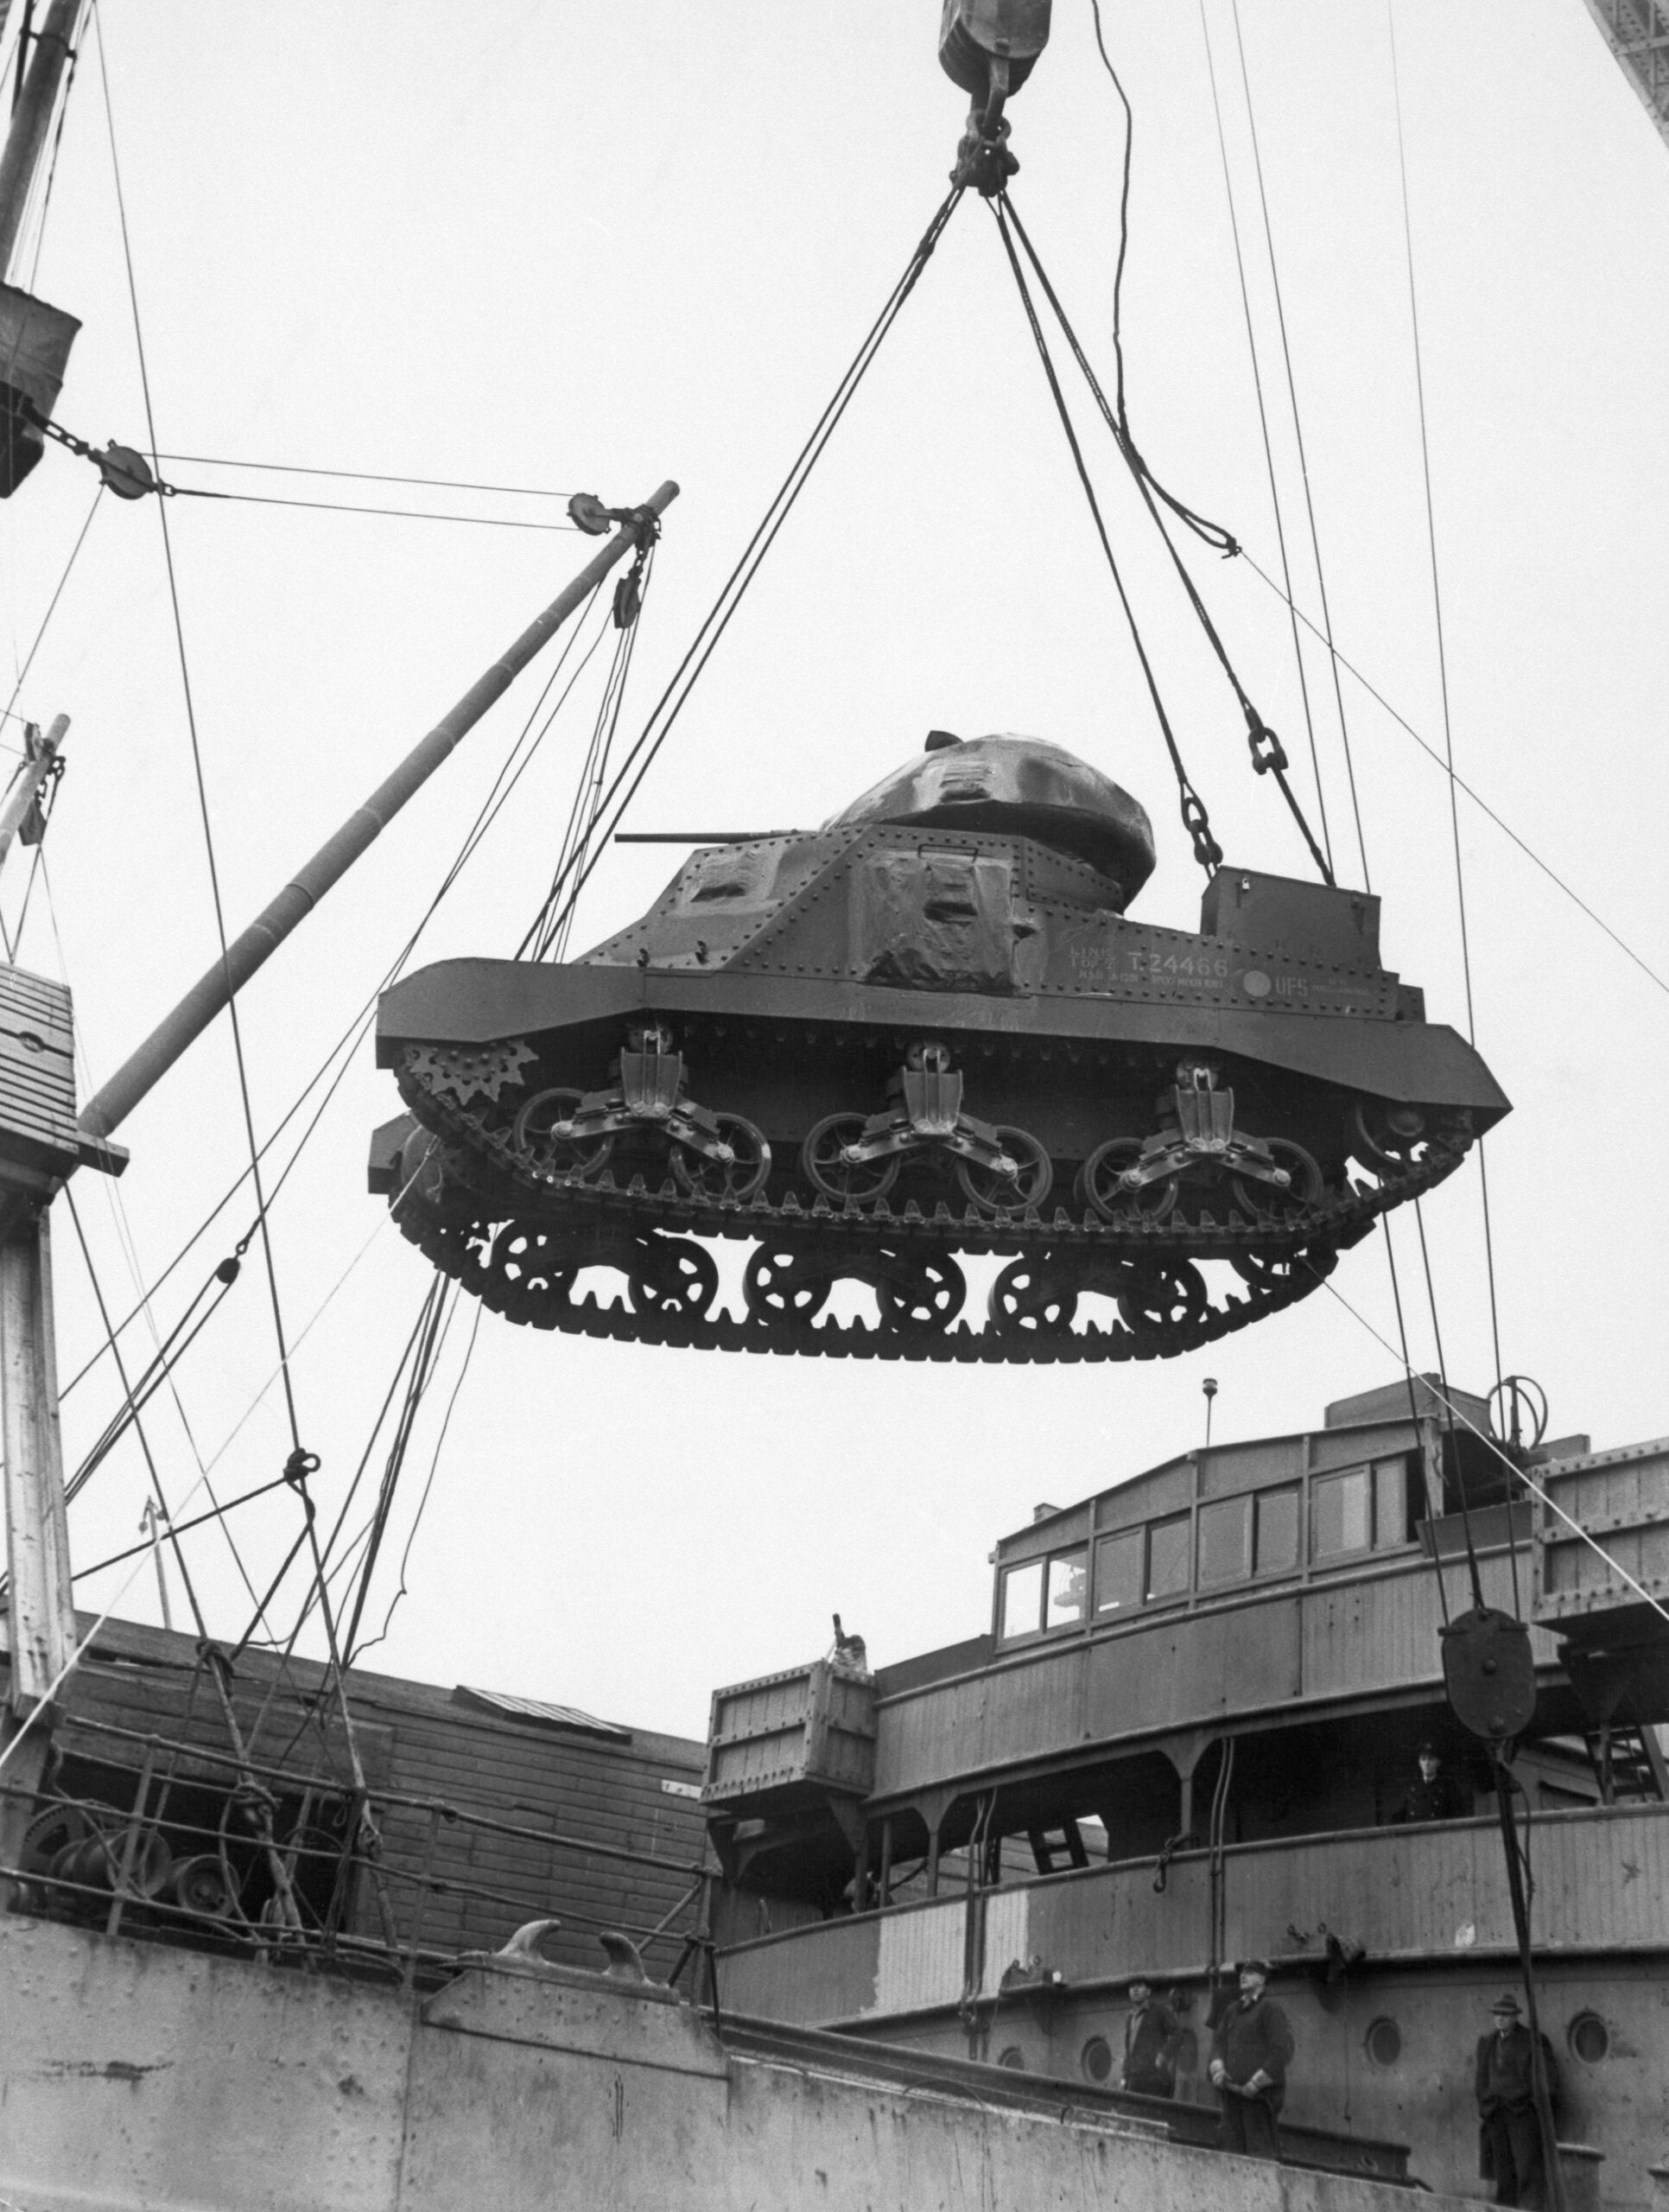 (Original Caption) A Lend lease tank coming over the side of a cargo ship in a U.S. Atlantic Coast port. World War II era photograph.